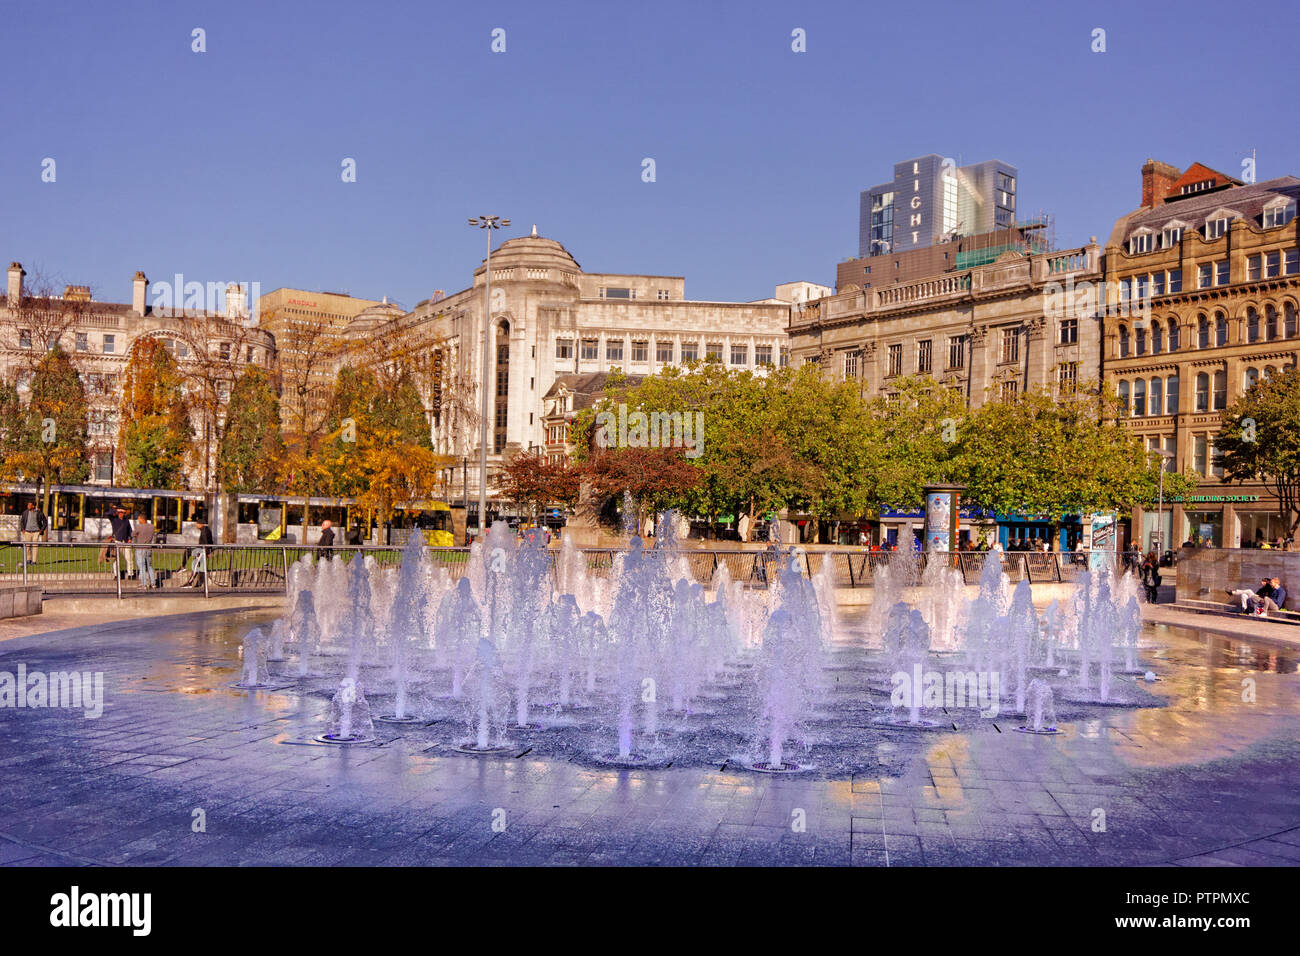 Des fontaines dans les jardins de Piccadilly, Manchester, Greater Manchester, Angleterre. UK. Banque D'Images